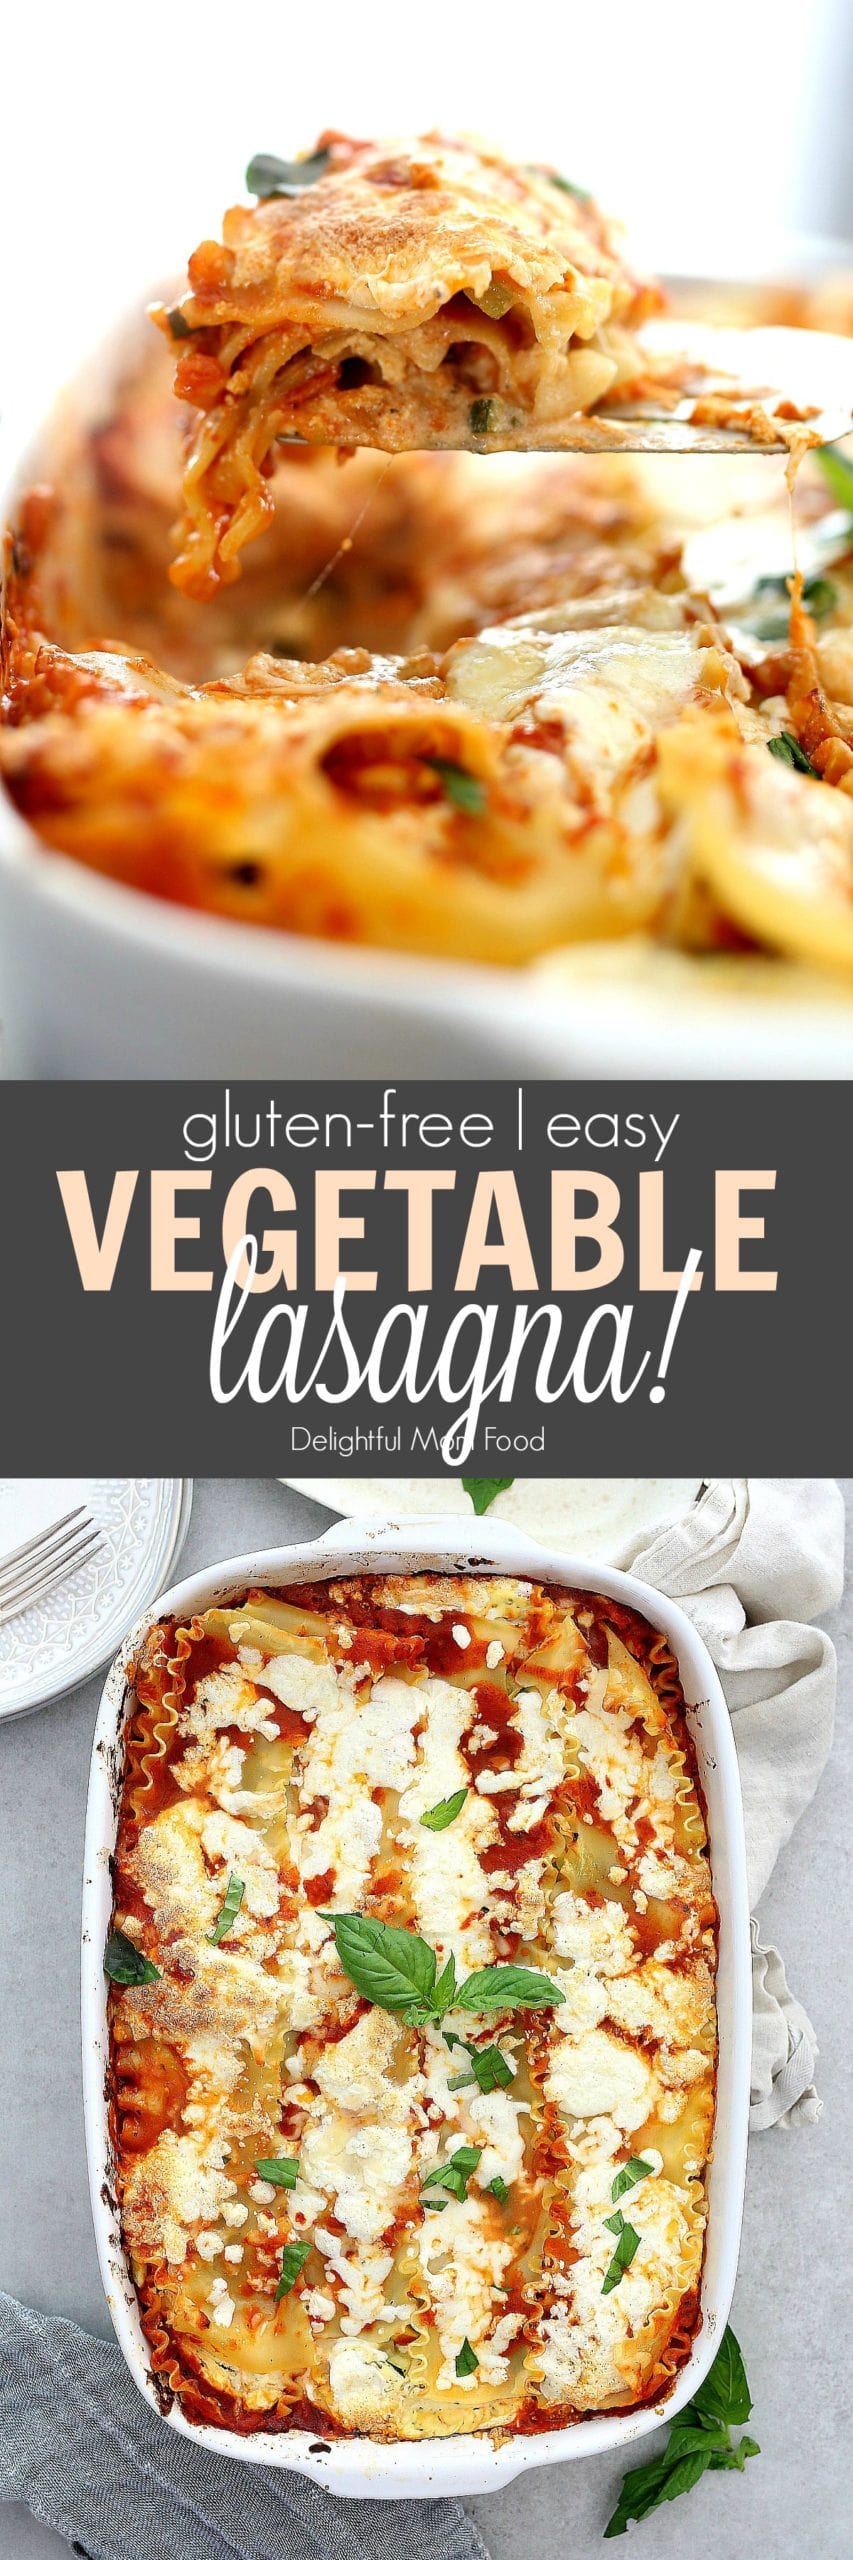 Gluten-Free Vegetable Lasagna - Delightful Mom Food